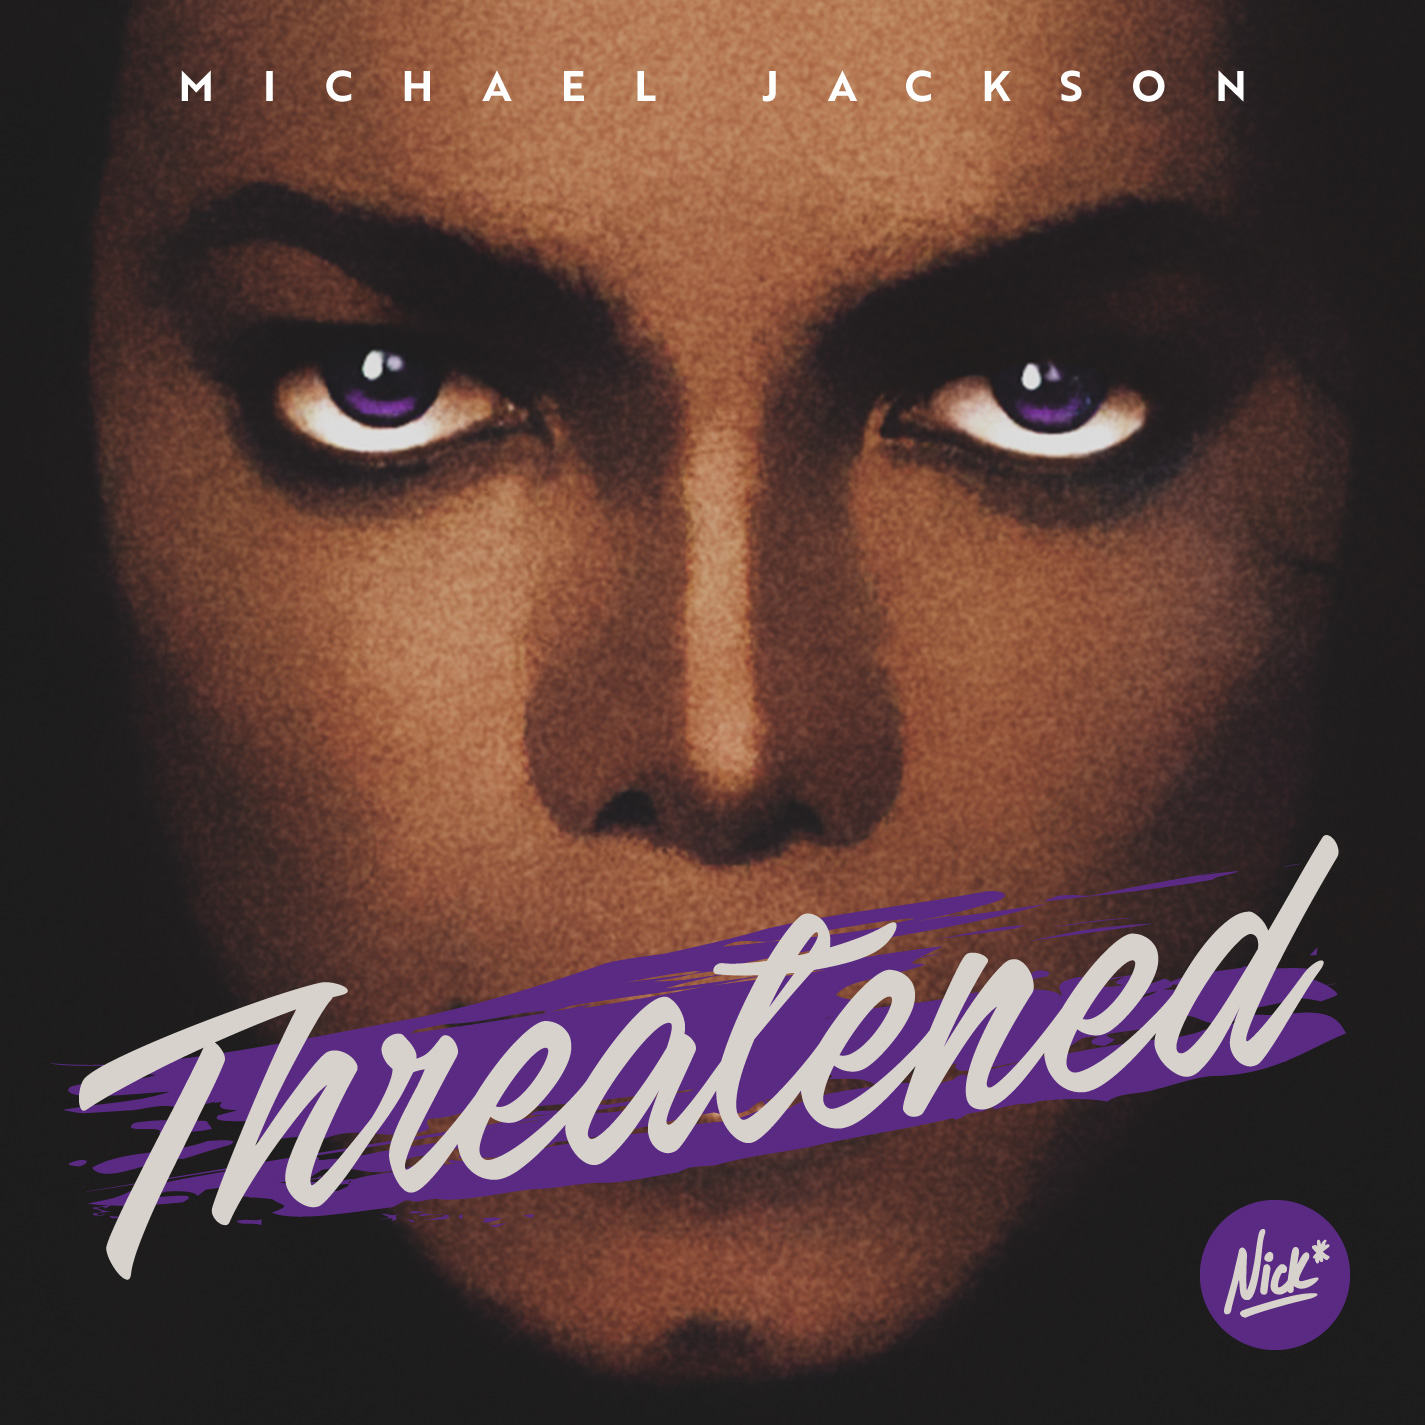 Michael Jackson - Threatened Nick* Crook County Remix